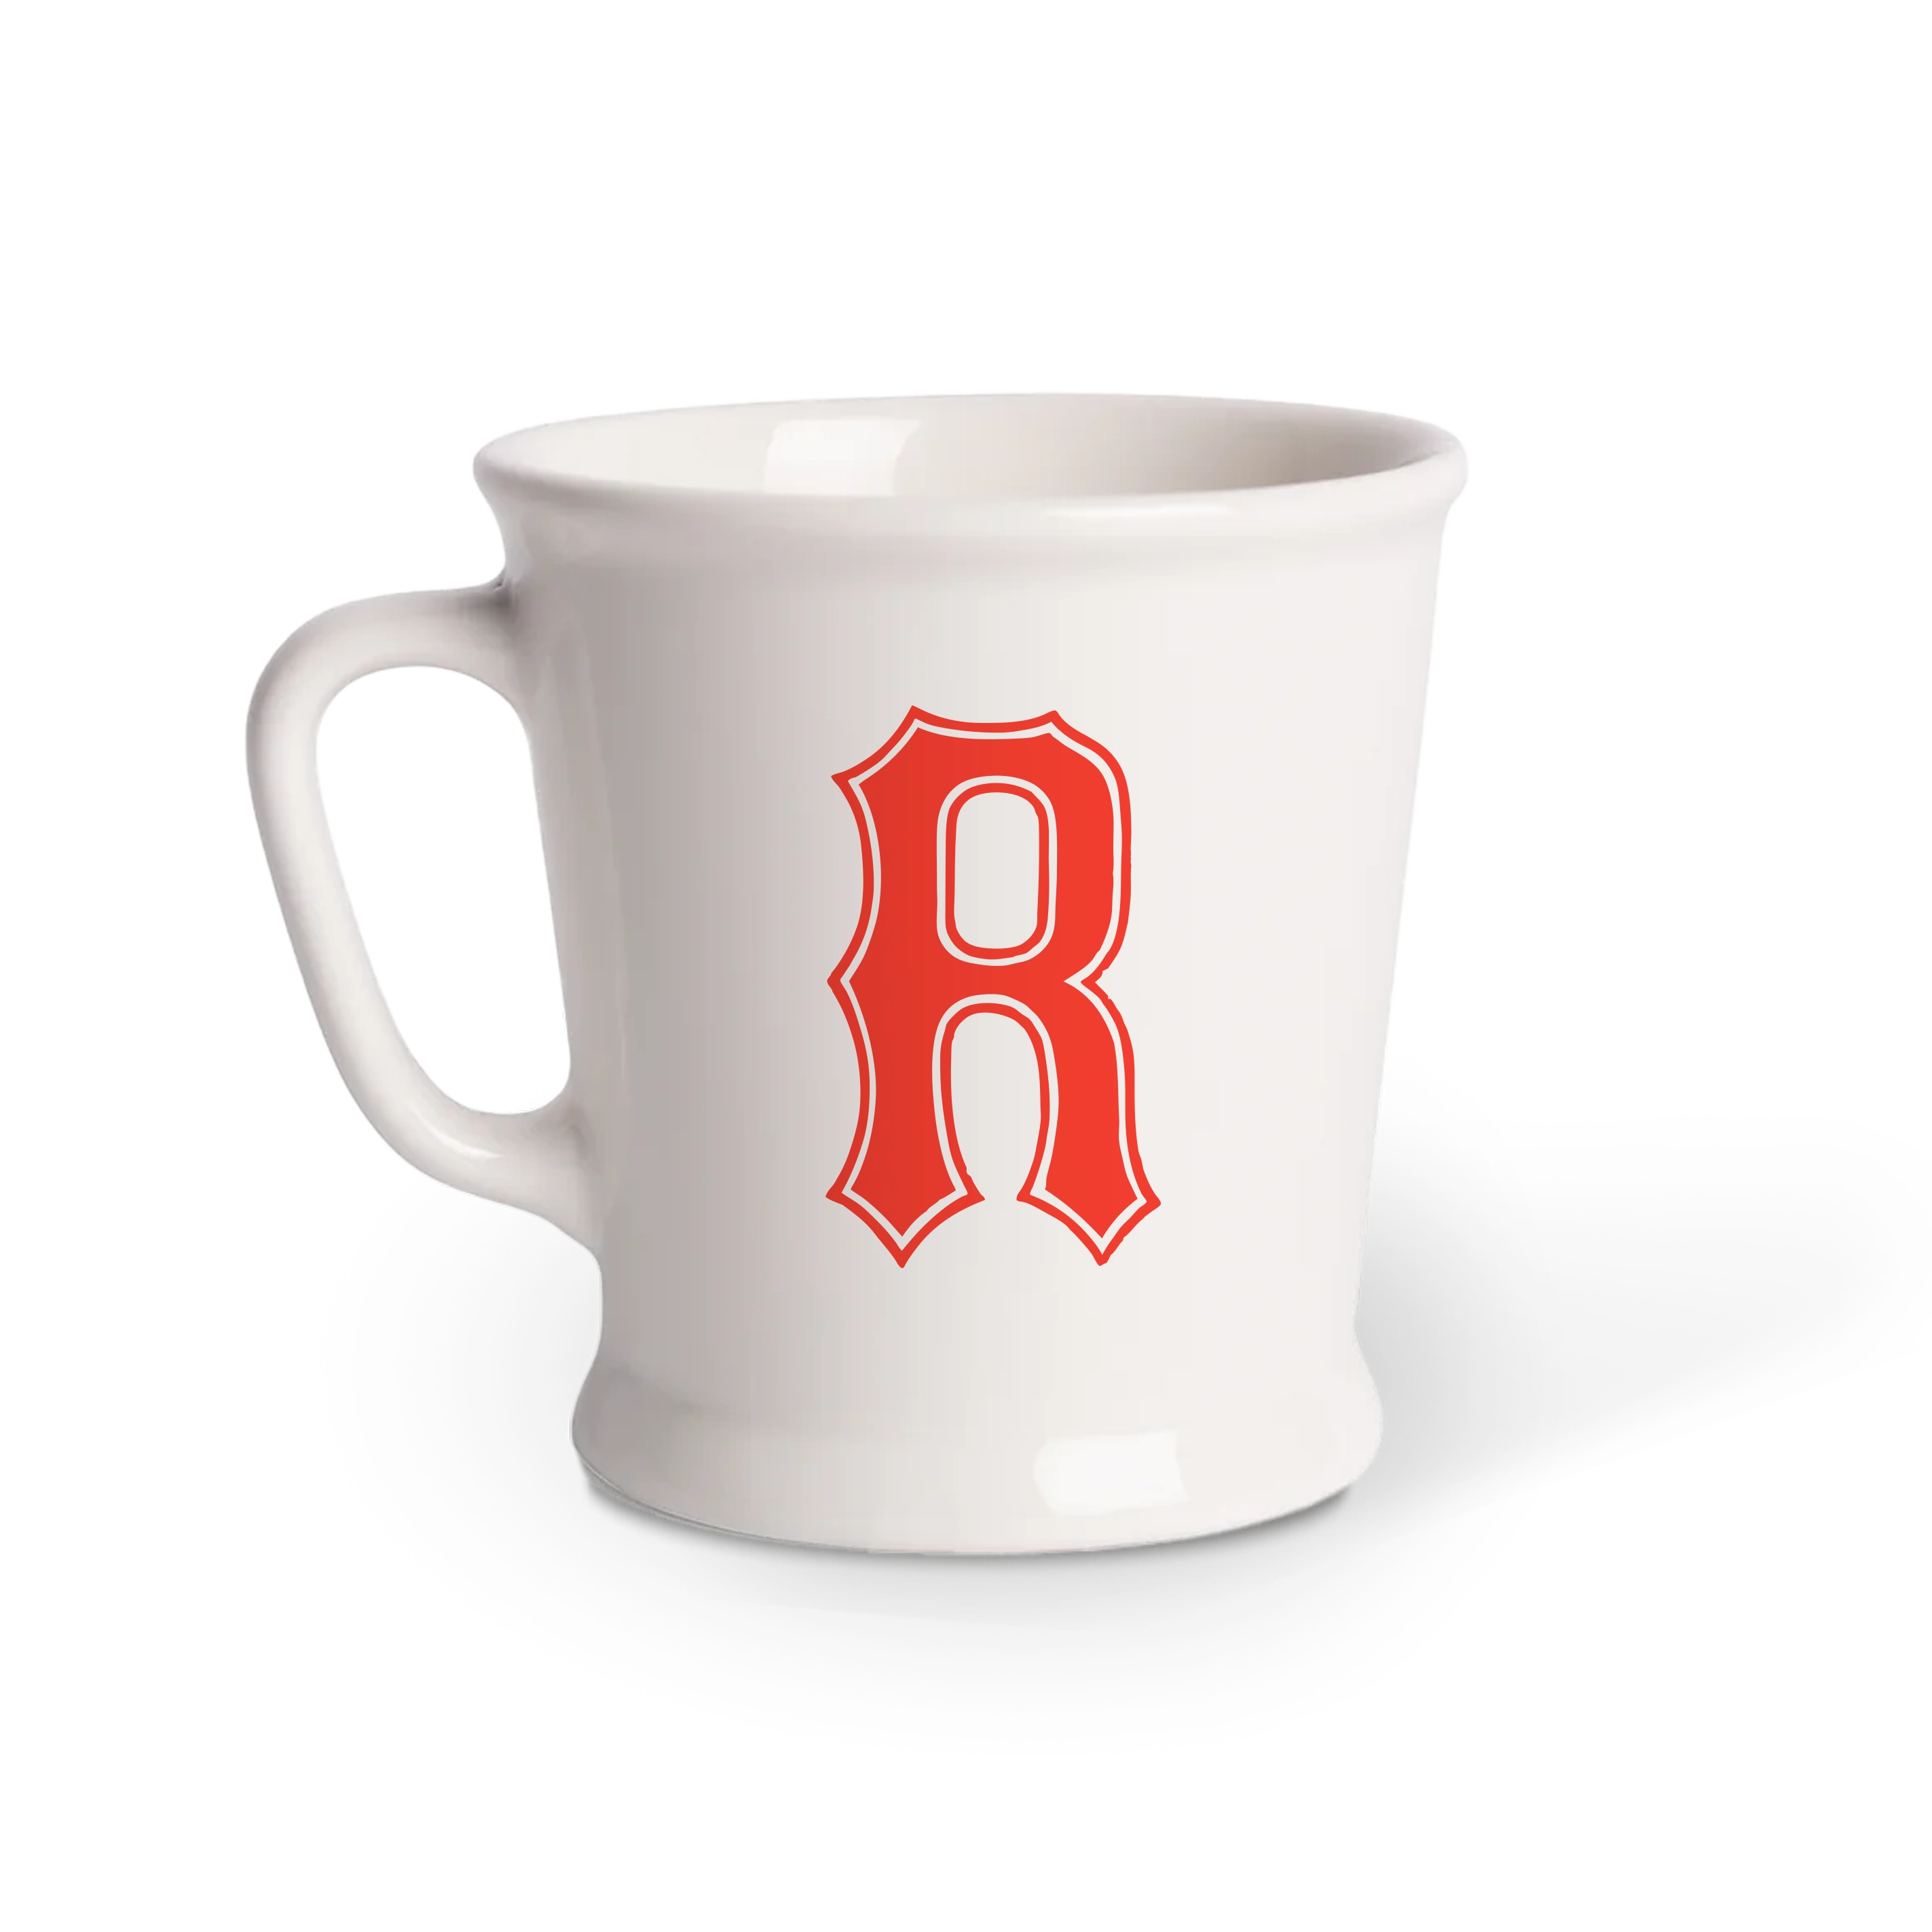 UNION  "R" mug